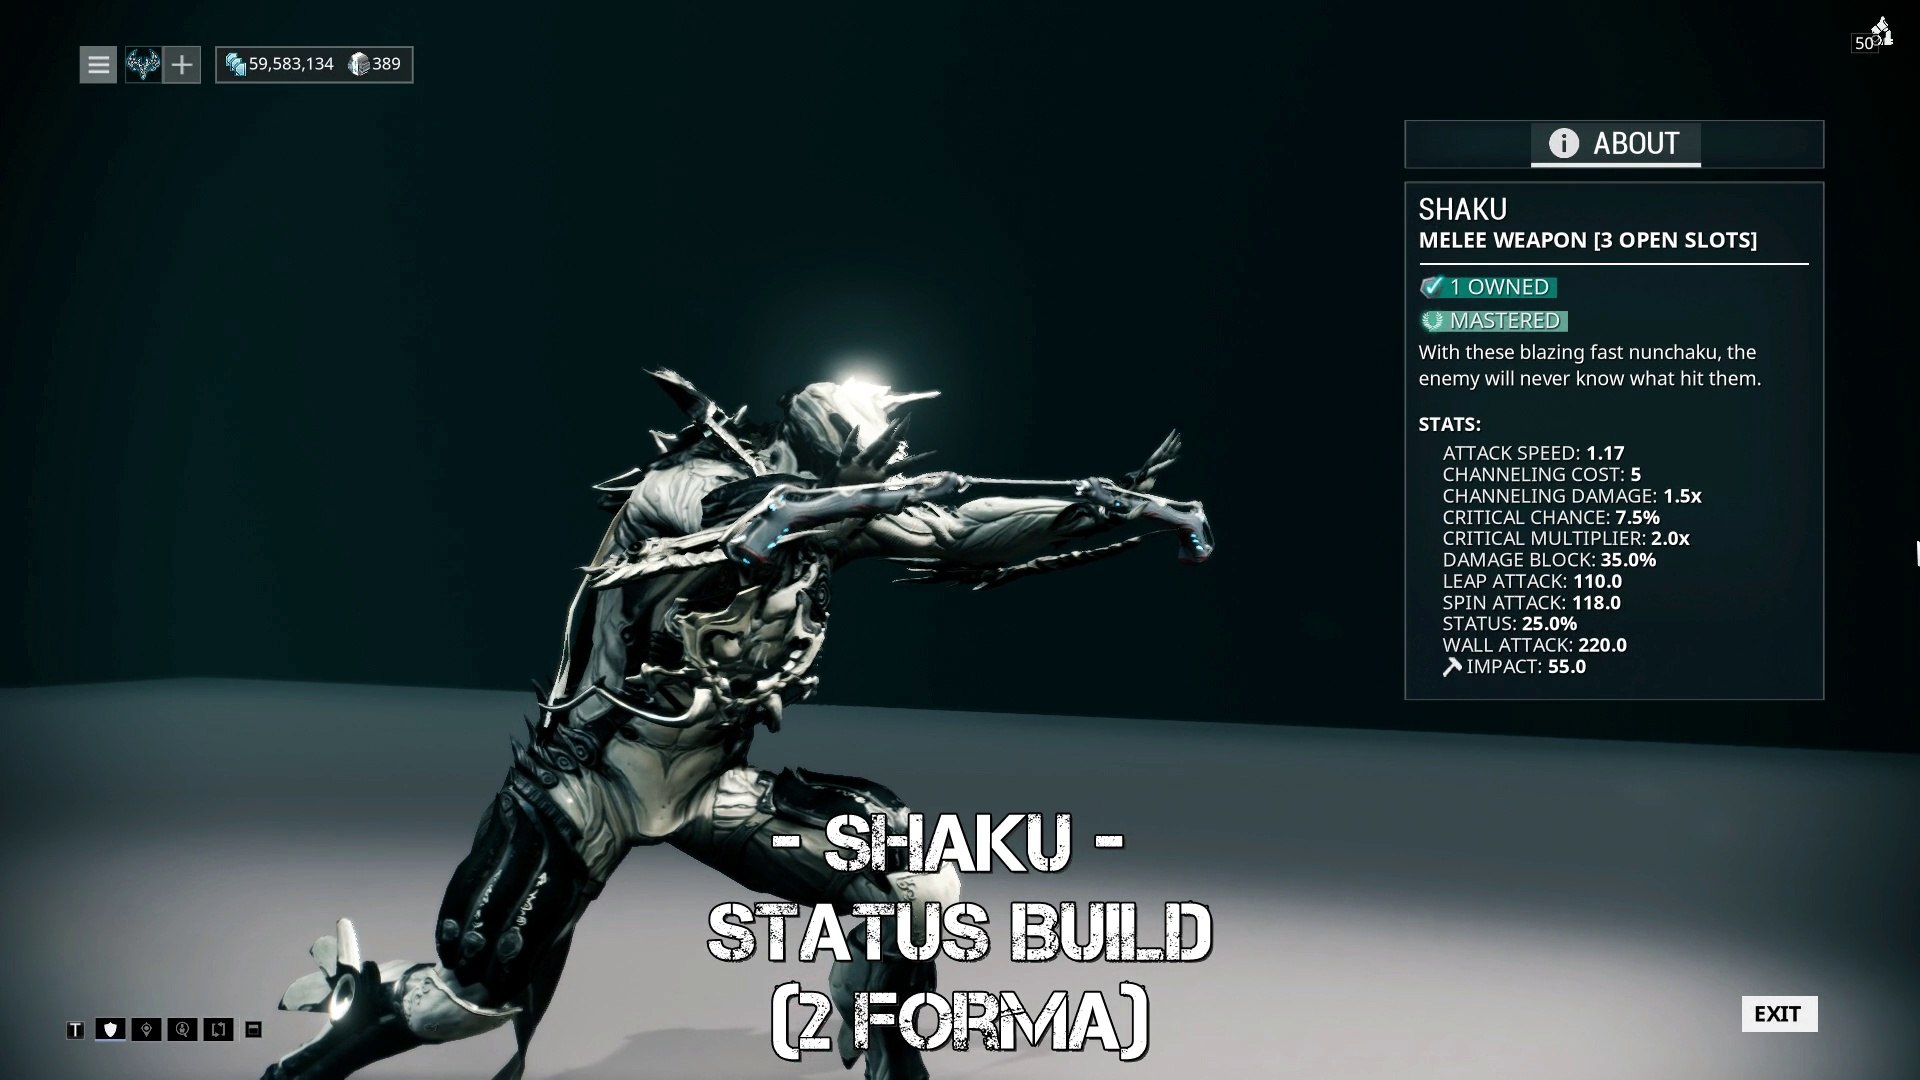 Warframe Shaku Status Build With 2 Forma Weapons Of The Ninja